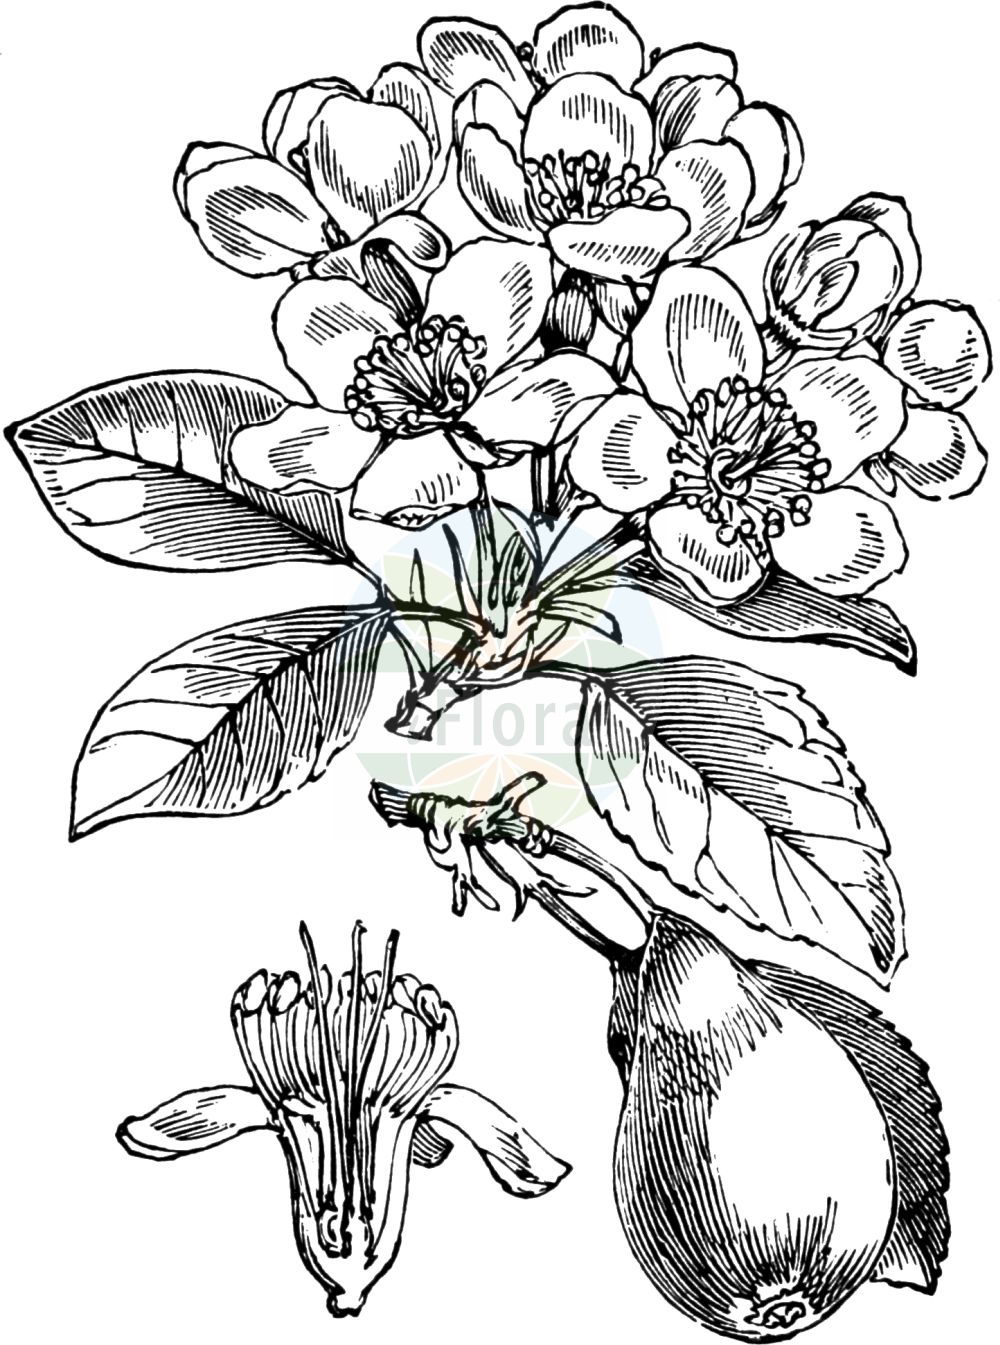 Historische Abbildung von Pyrus communis (Kultur-Birne - Pear). Das Bild zeigt Blatt, Bluete, Frucht und Same. ---- Historical Drawing of Pyrus communis (Kultur-Birne - Pear). The image is showing leaf, flower, fruit and seed.(Pyrus communis,Kultur-Birne,Pear,Crataegus excelsa,Pyrenia pyrus,Pyrus amphigenea,Pyrus balansae,Pyrus communis,Pyrus elata,Pyrus sosnovskyi,Pyrus vsevolodii,Sorbus pyrus,Kultur-Birne,Pear,Wild Pear,Common Pear,Pyrus,Birne,Pear,Rosaceae,Rosengewächse,Rose family,Blatt,Bluete,Frucht,Same,leaf,flower,fruit,seed,Fitch et al. (1880))